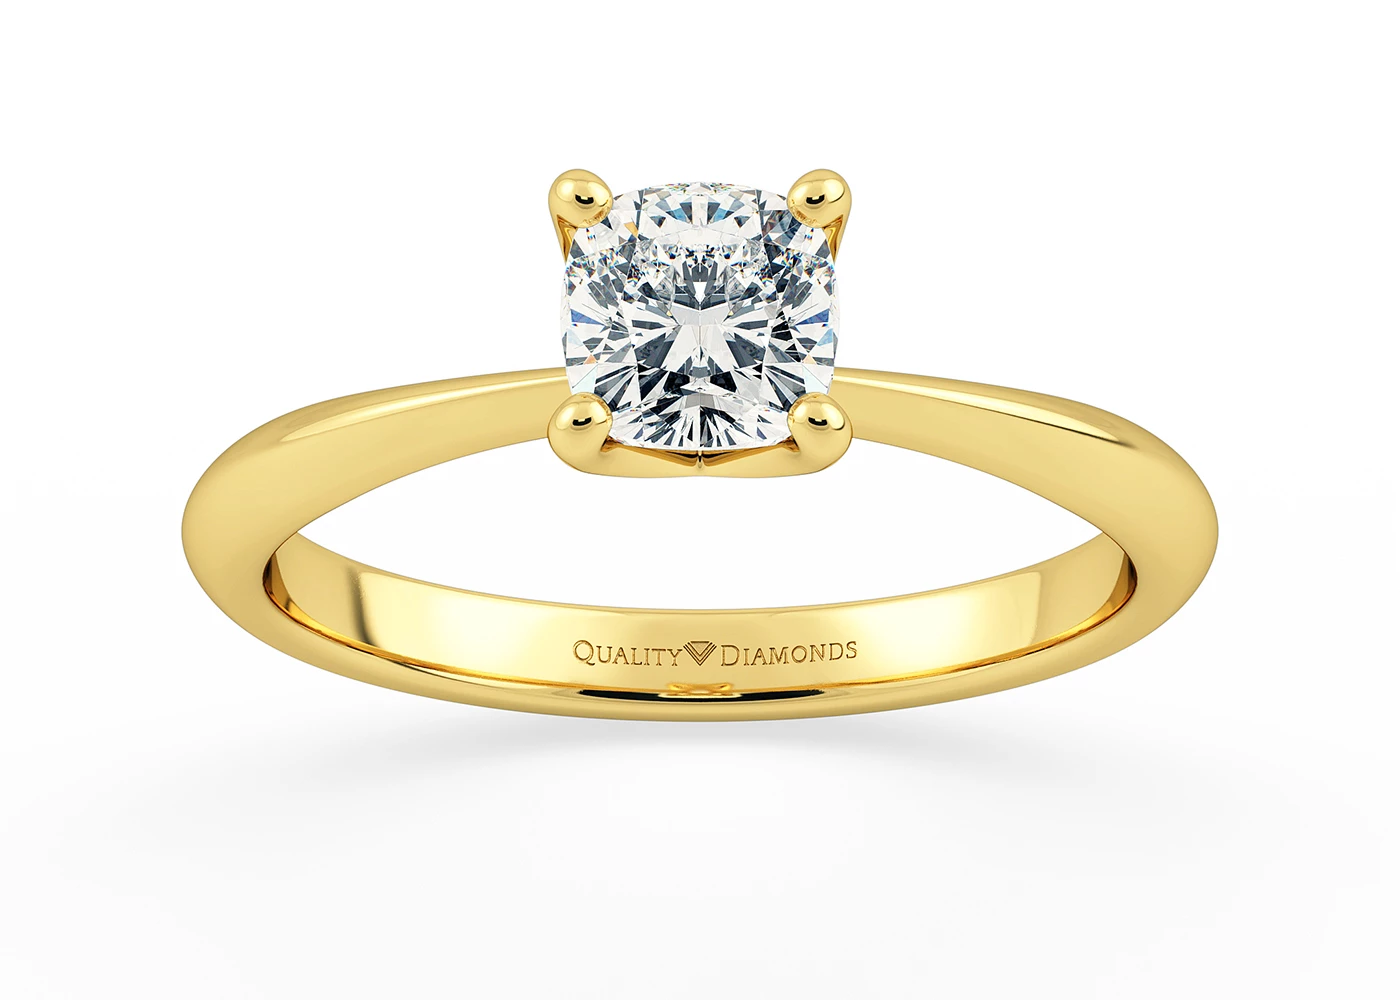 Cushion Amorette Diamond Ring in 9K Yellow Gold